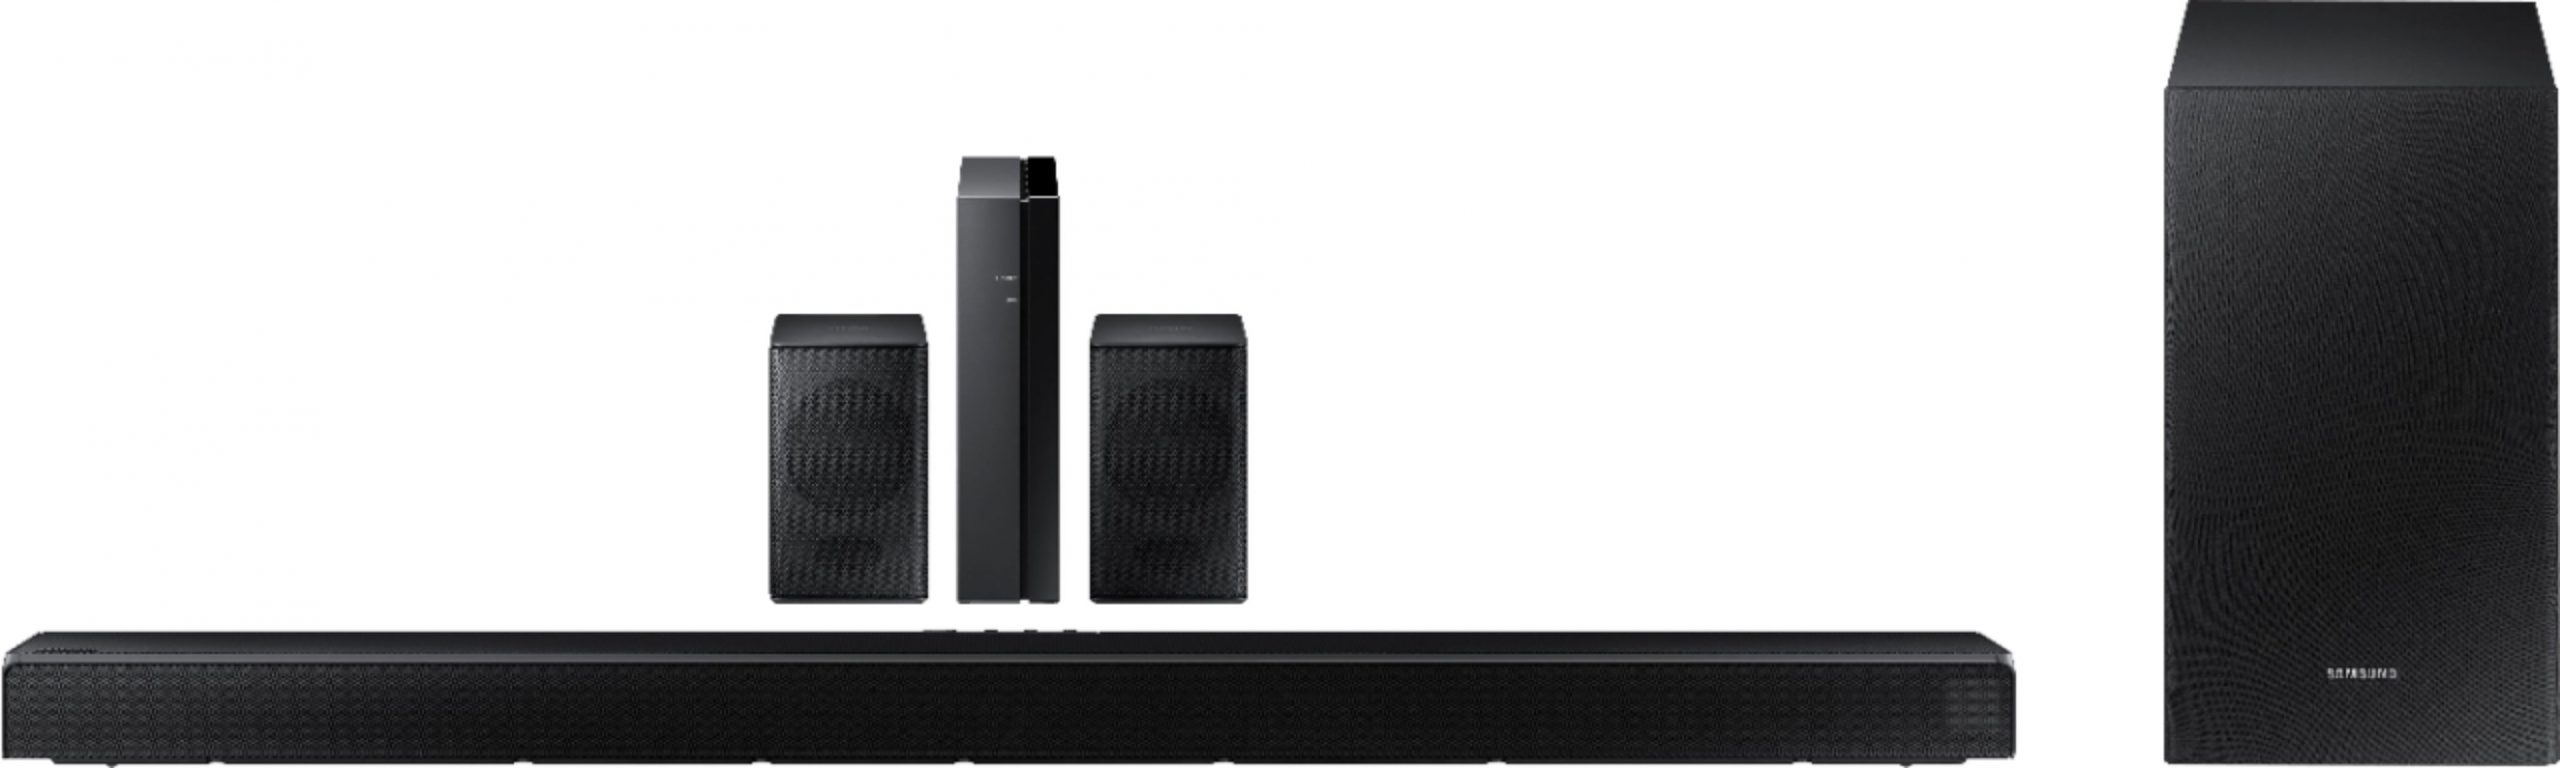 Samsung Sound System HOT Black Friday Deal LIVE NOW!